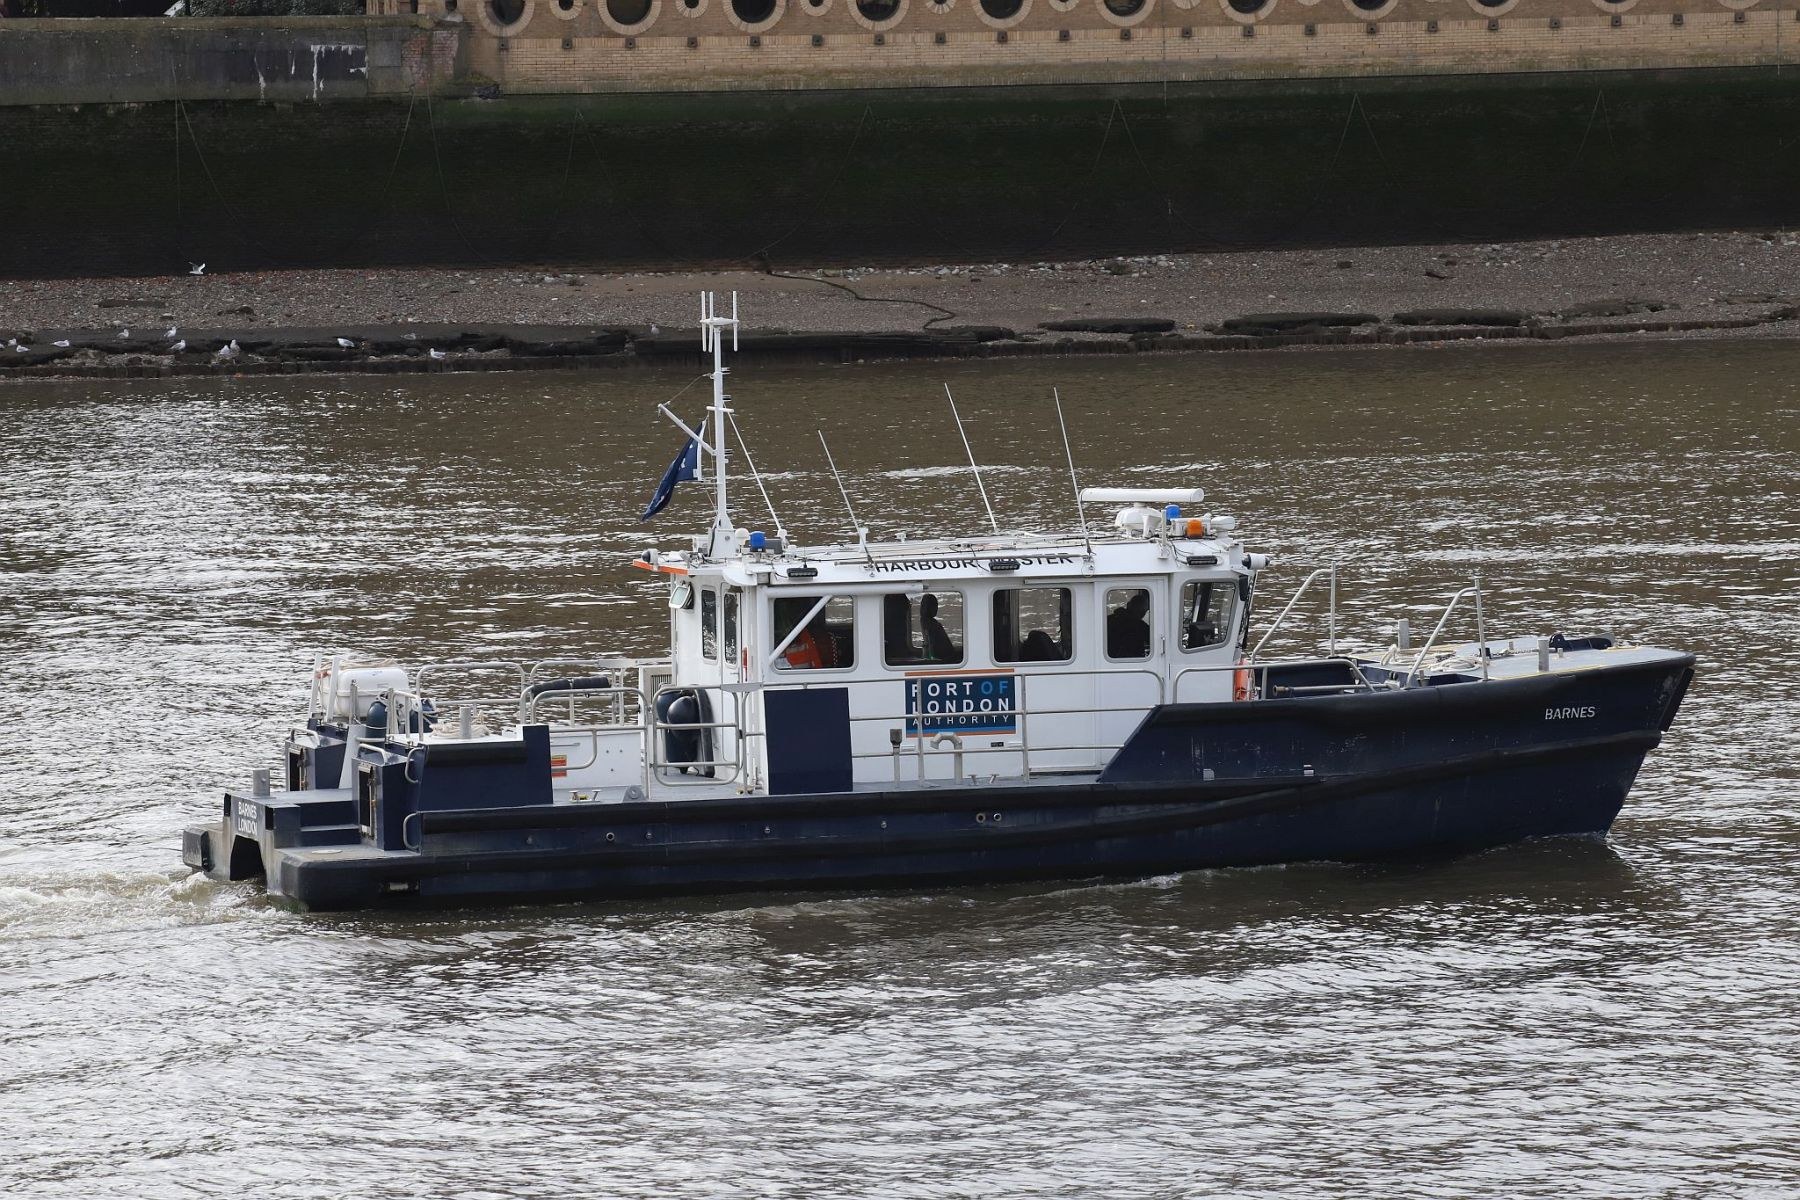 Port of London Authority Harbour Master boat "Barnes", 2022 River Thames Armistice Day flotilla